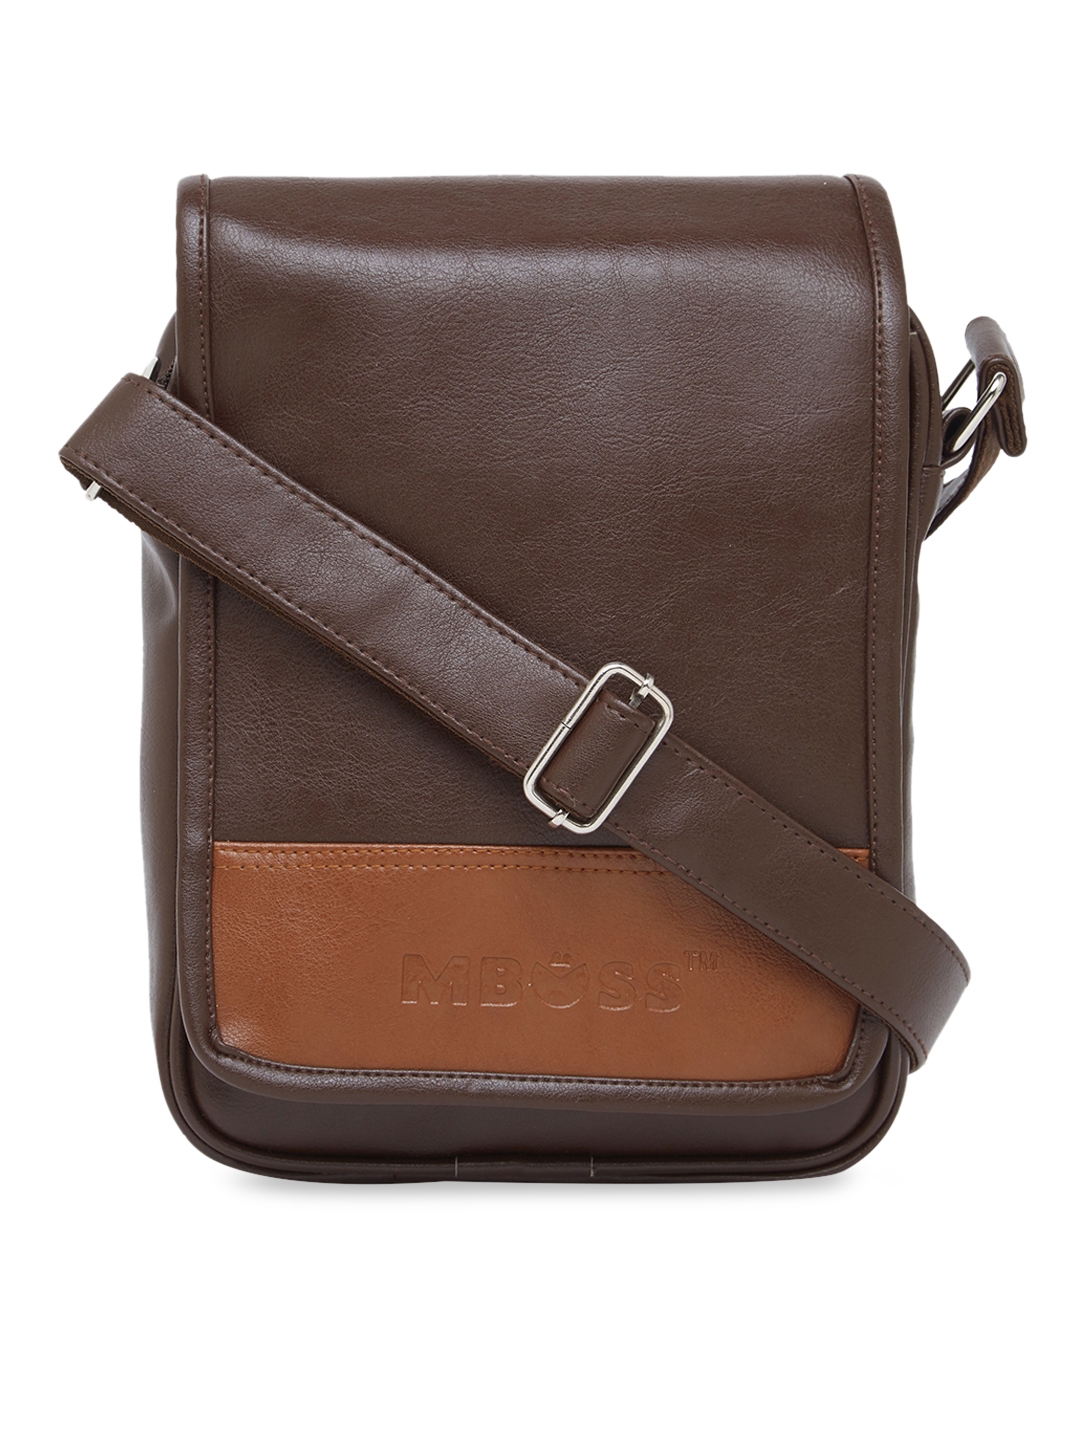 MBOSS Brown Solid Messenger Bag